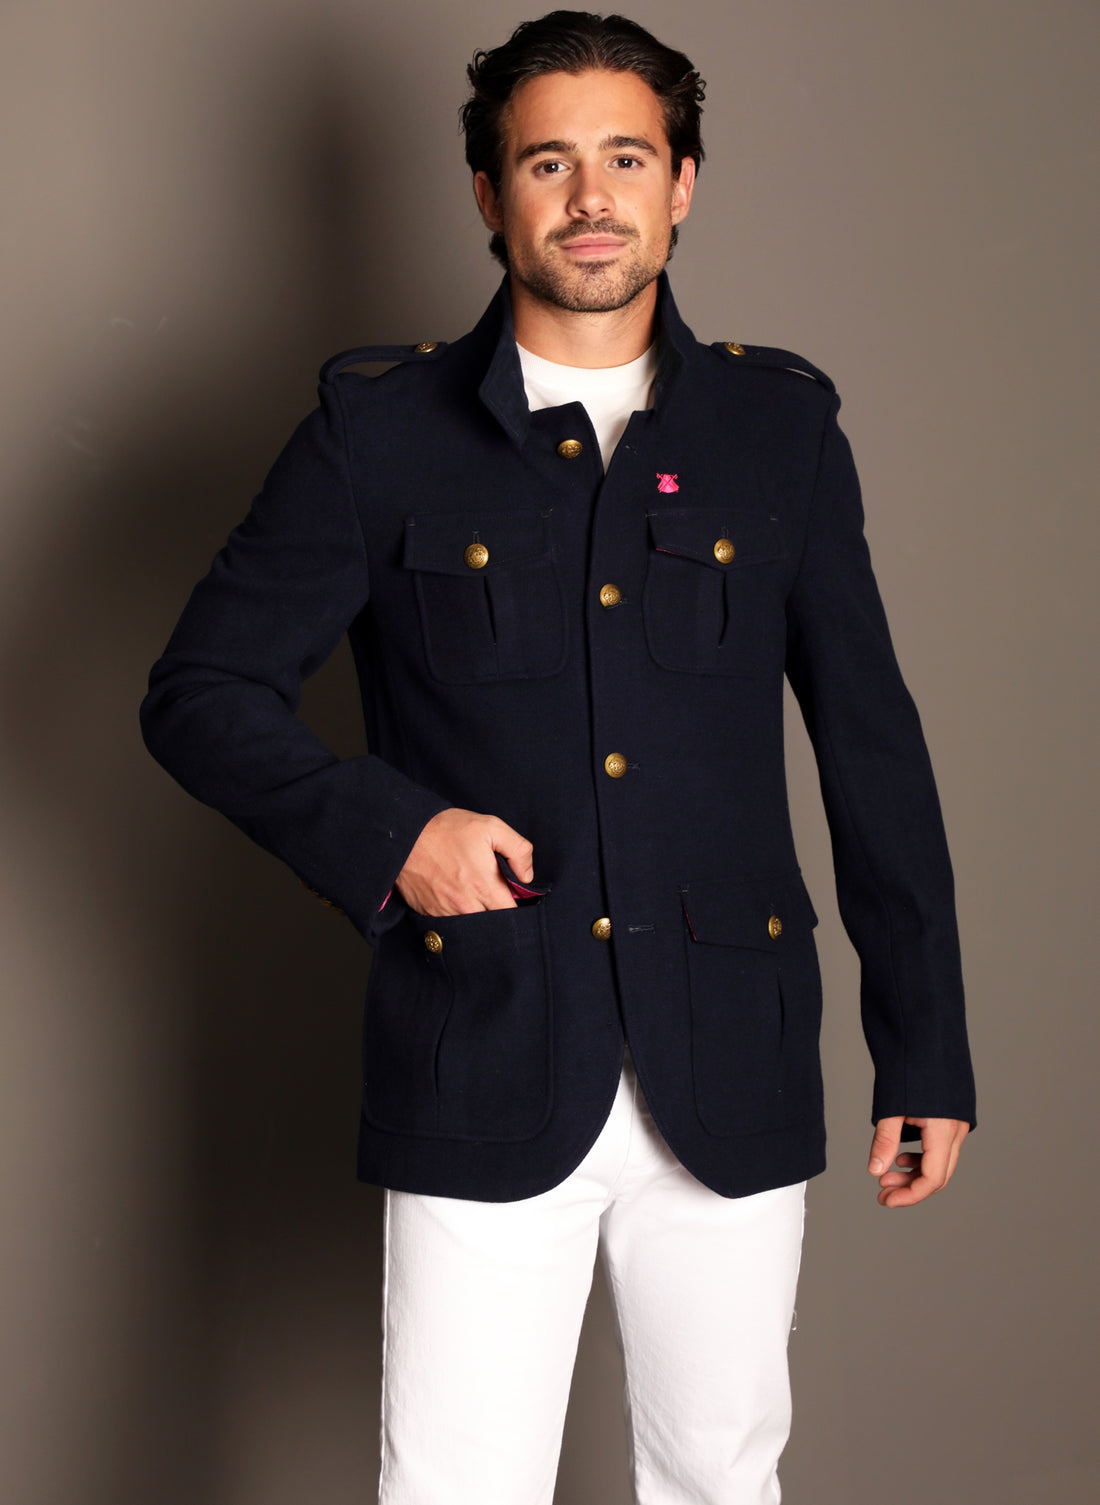 Austrian Jacket for Men Navy Blue